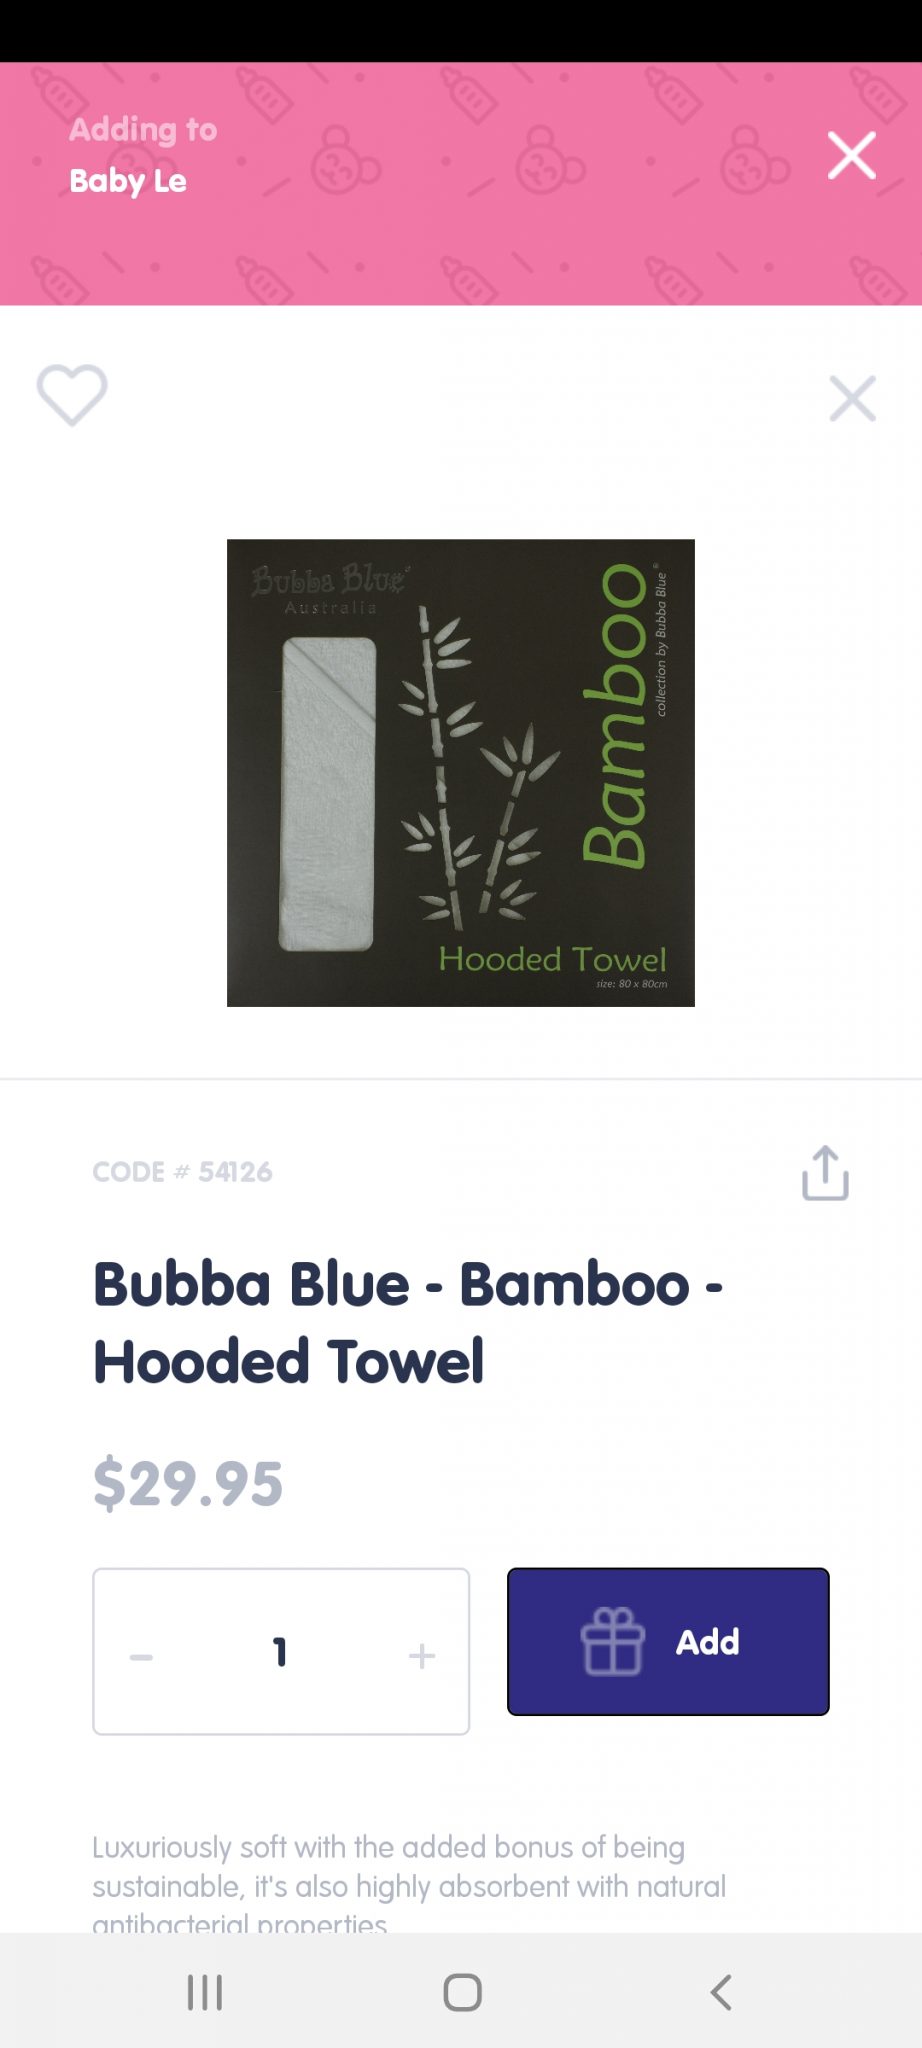 Bubba blue bamboo hooded towel